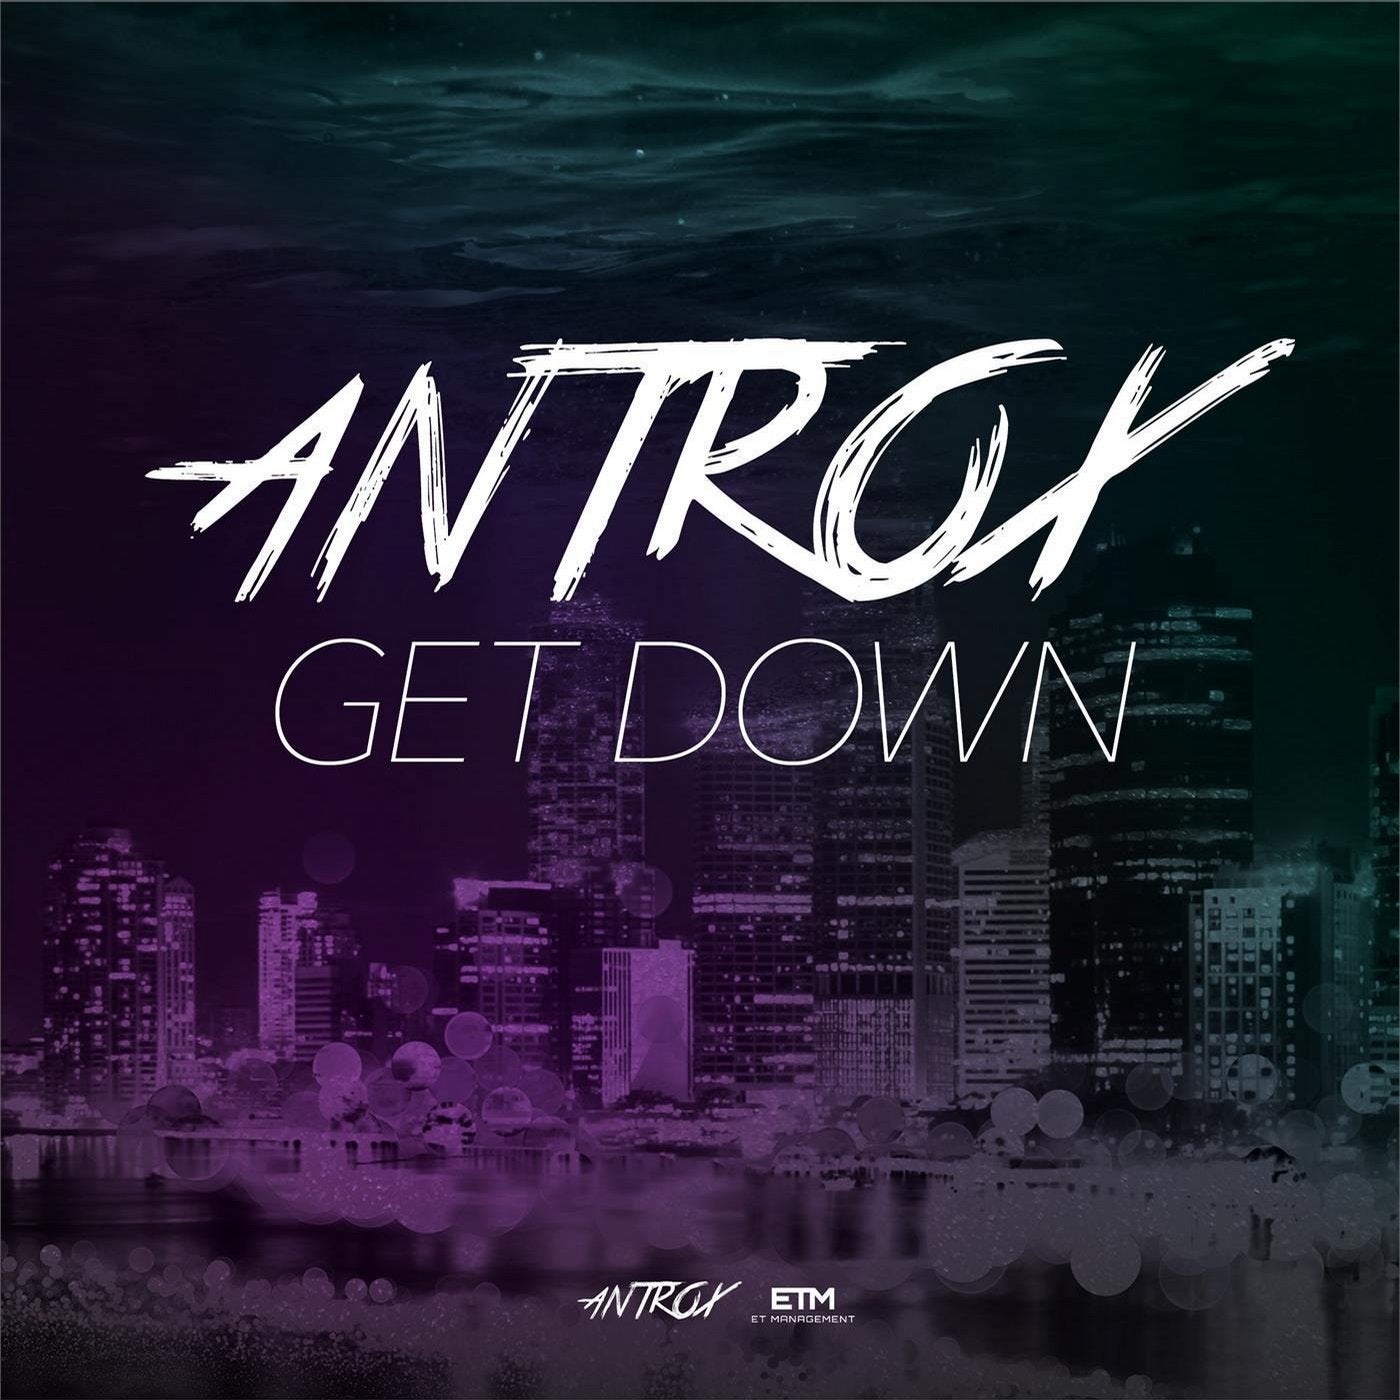 Get Down - (Original Mix)